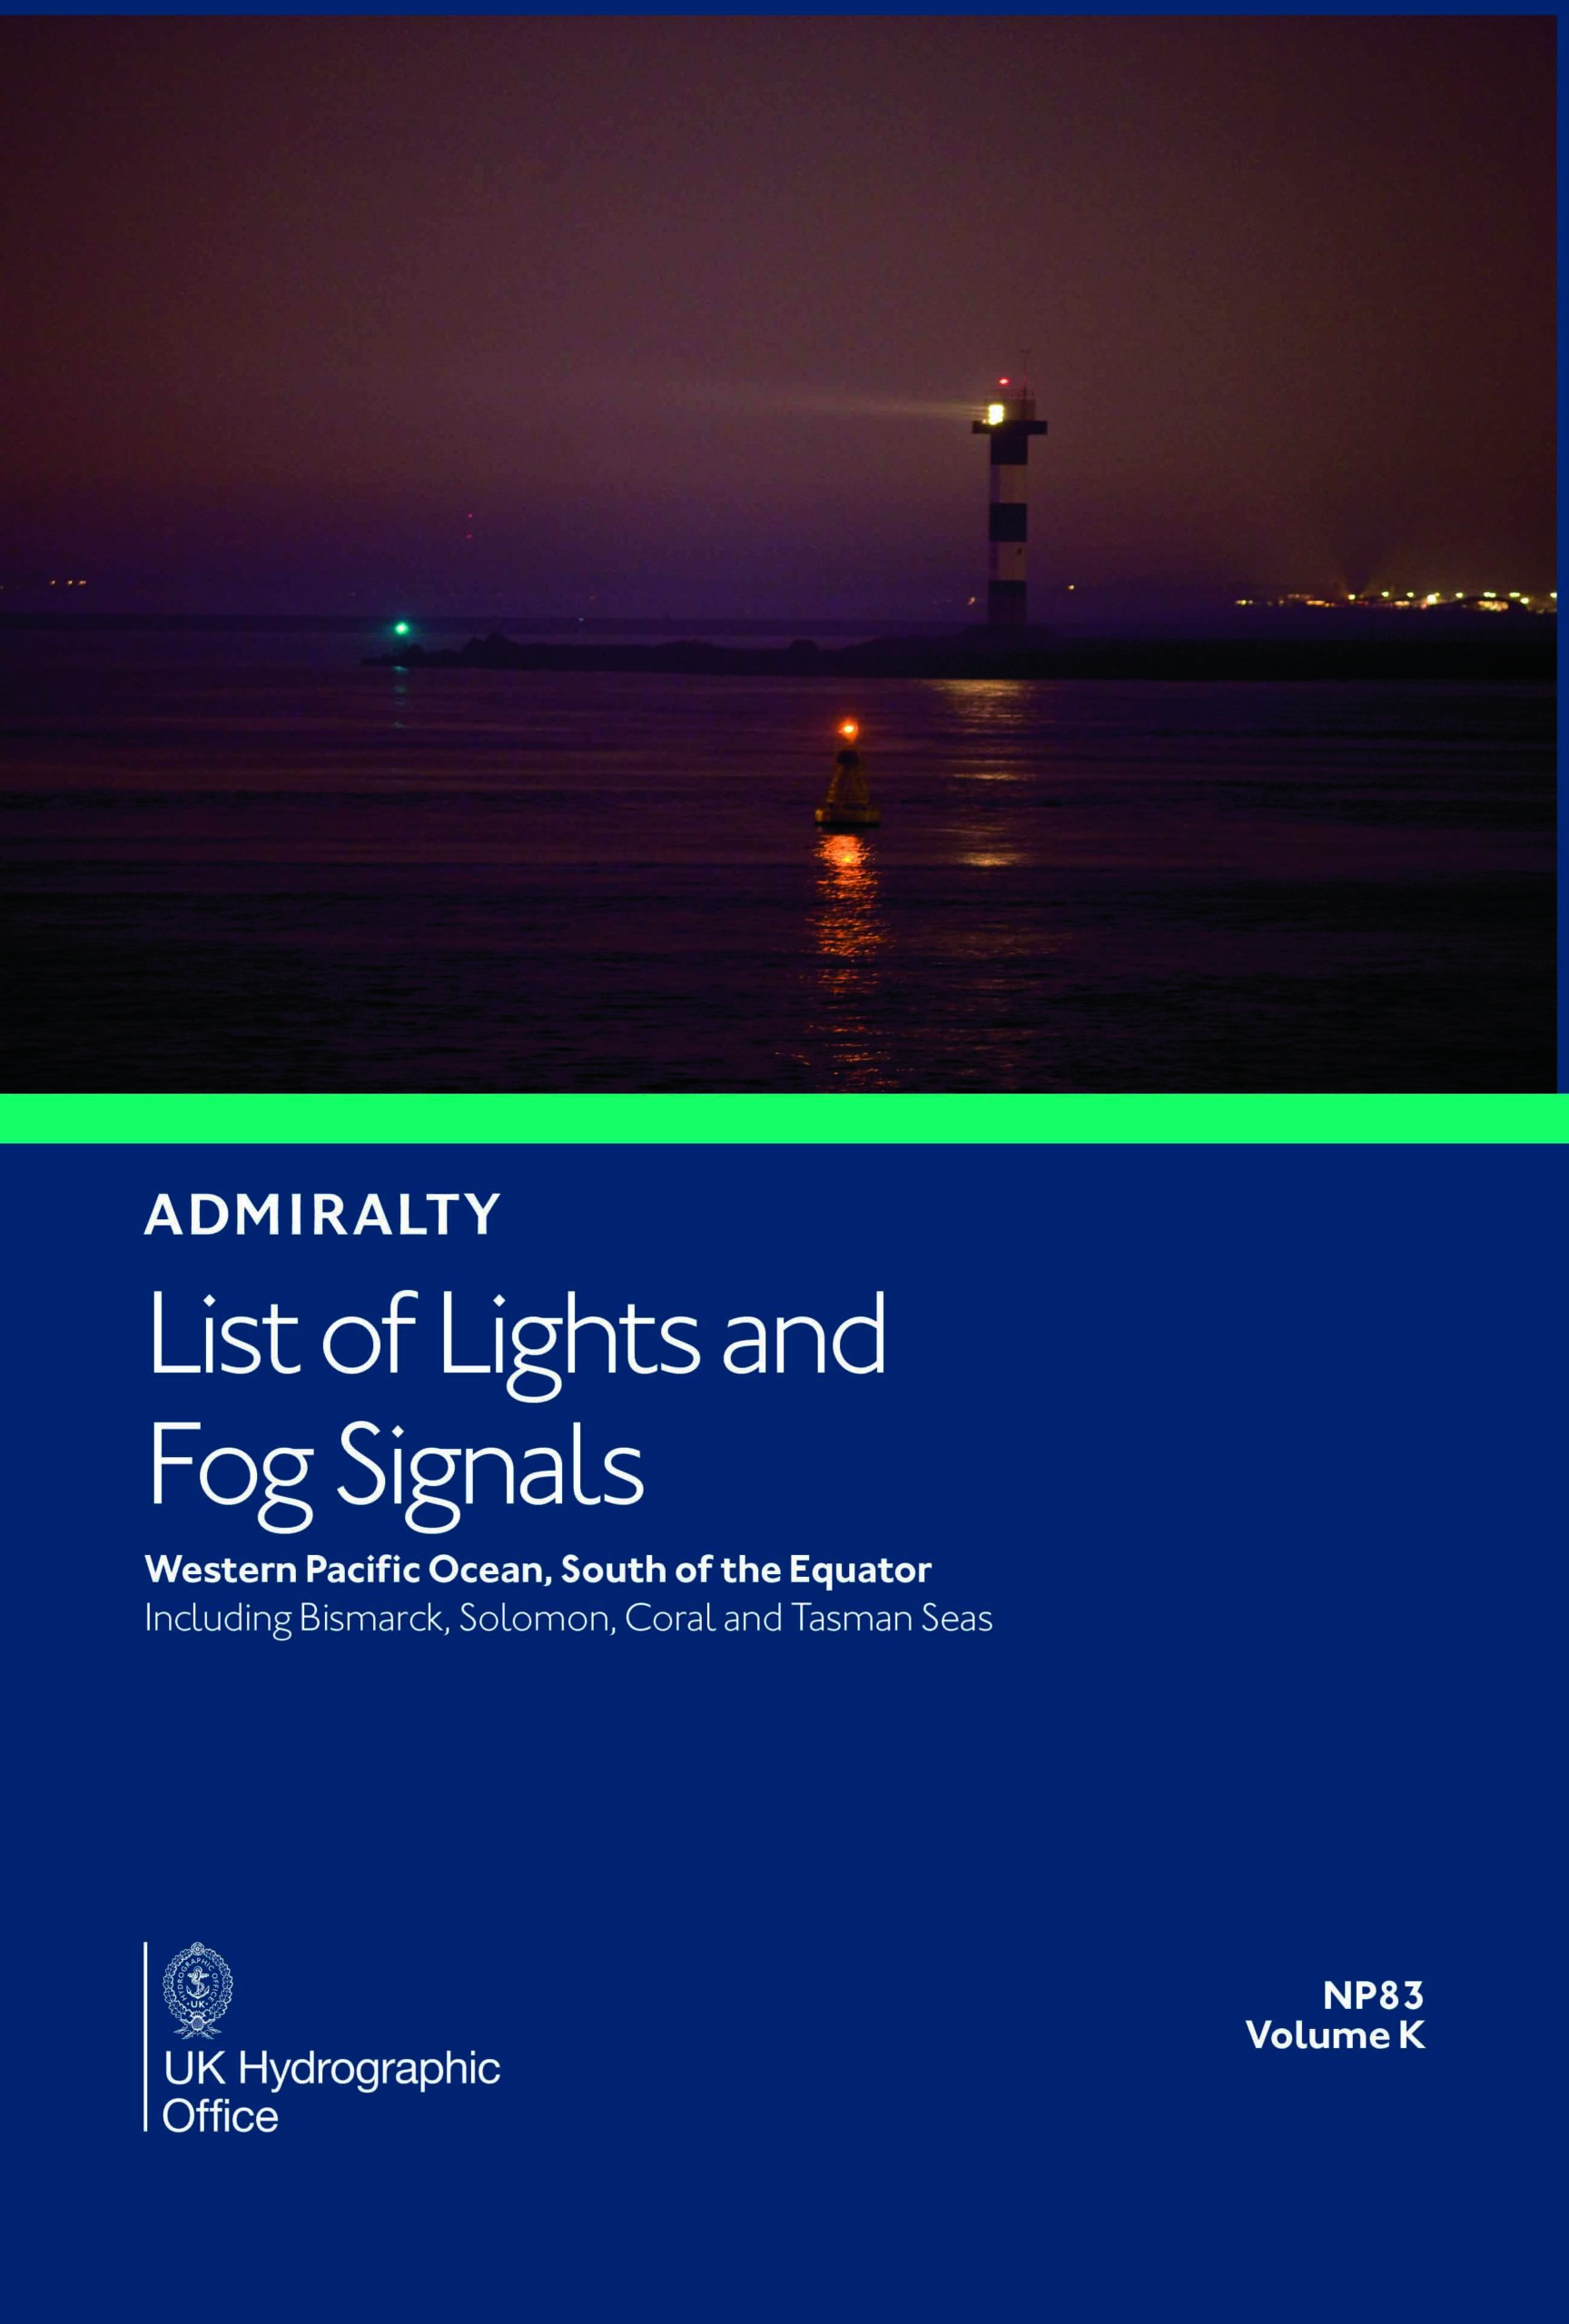 NP83 List of Lights & Fog Signals Vol K